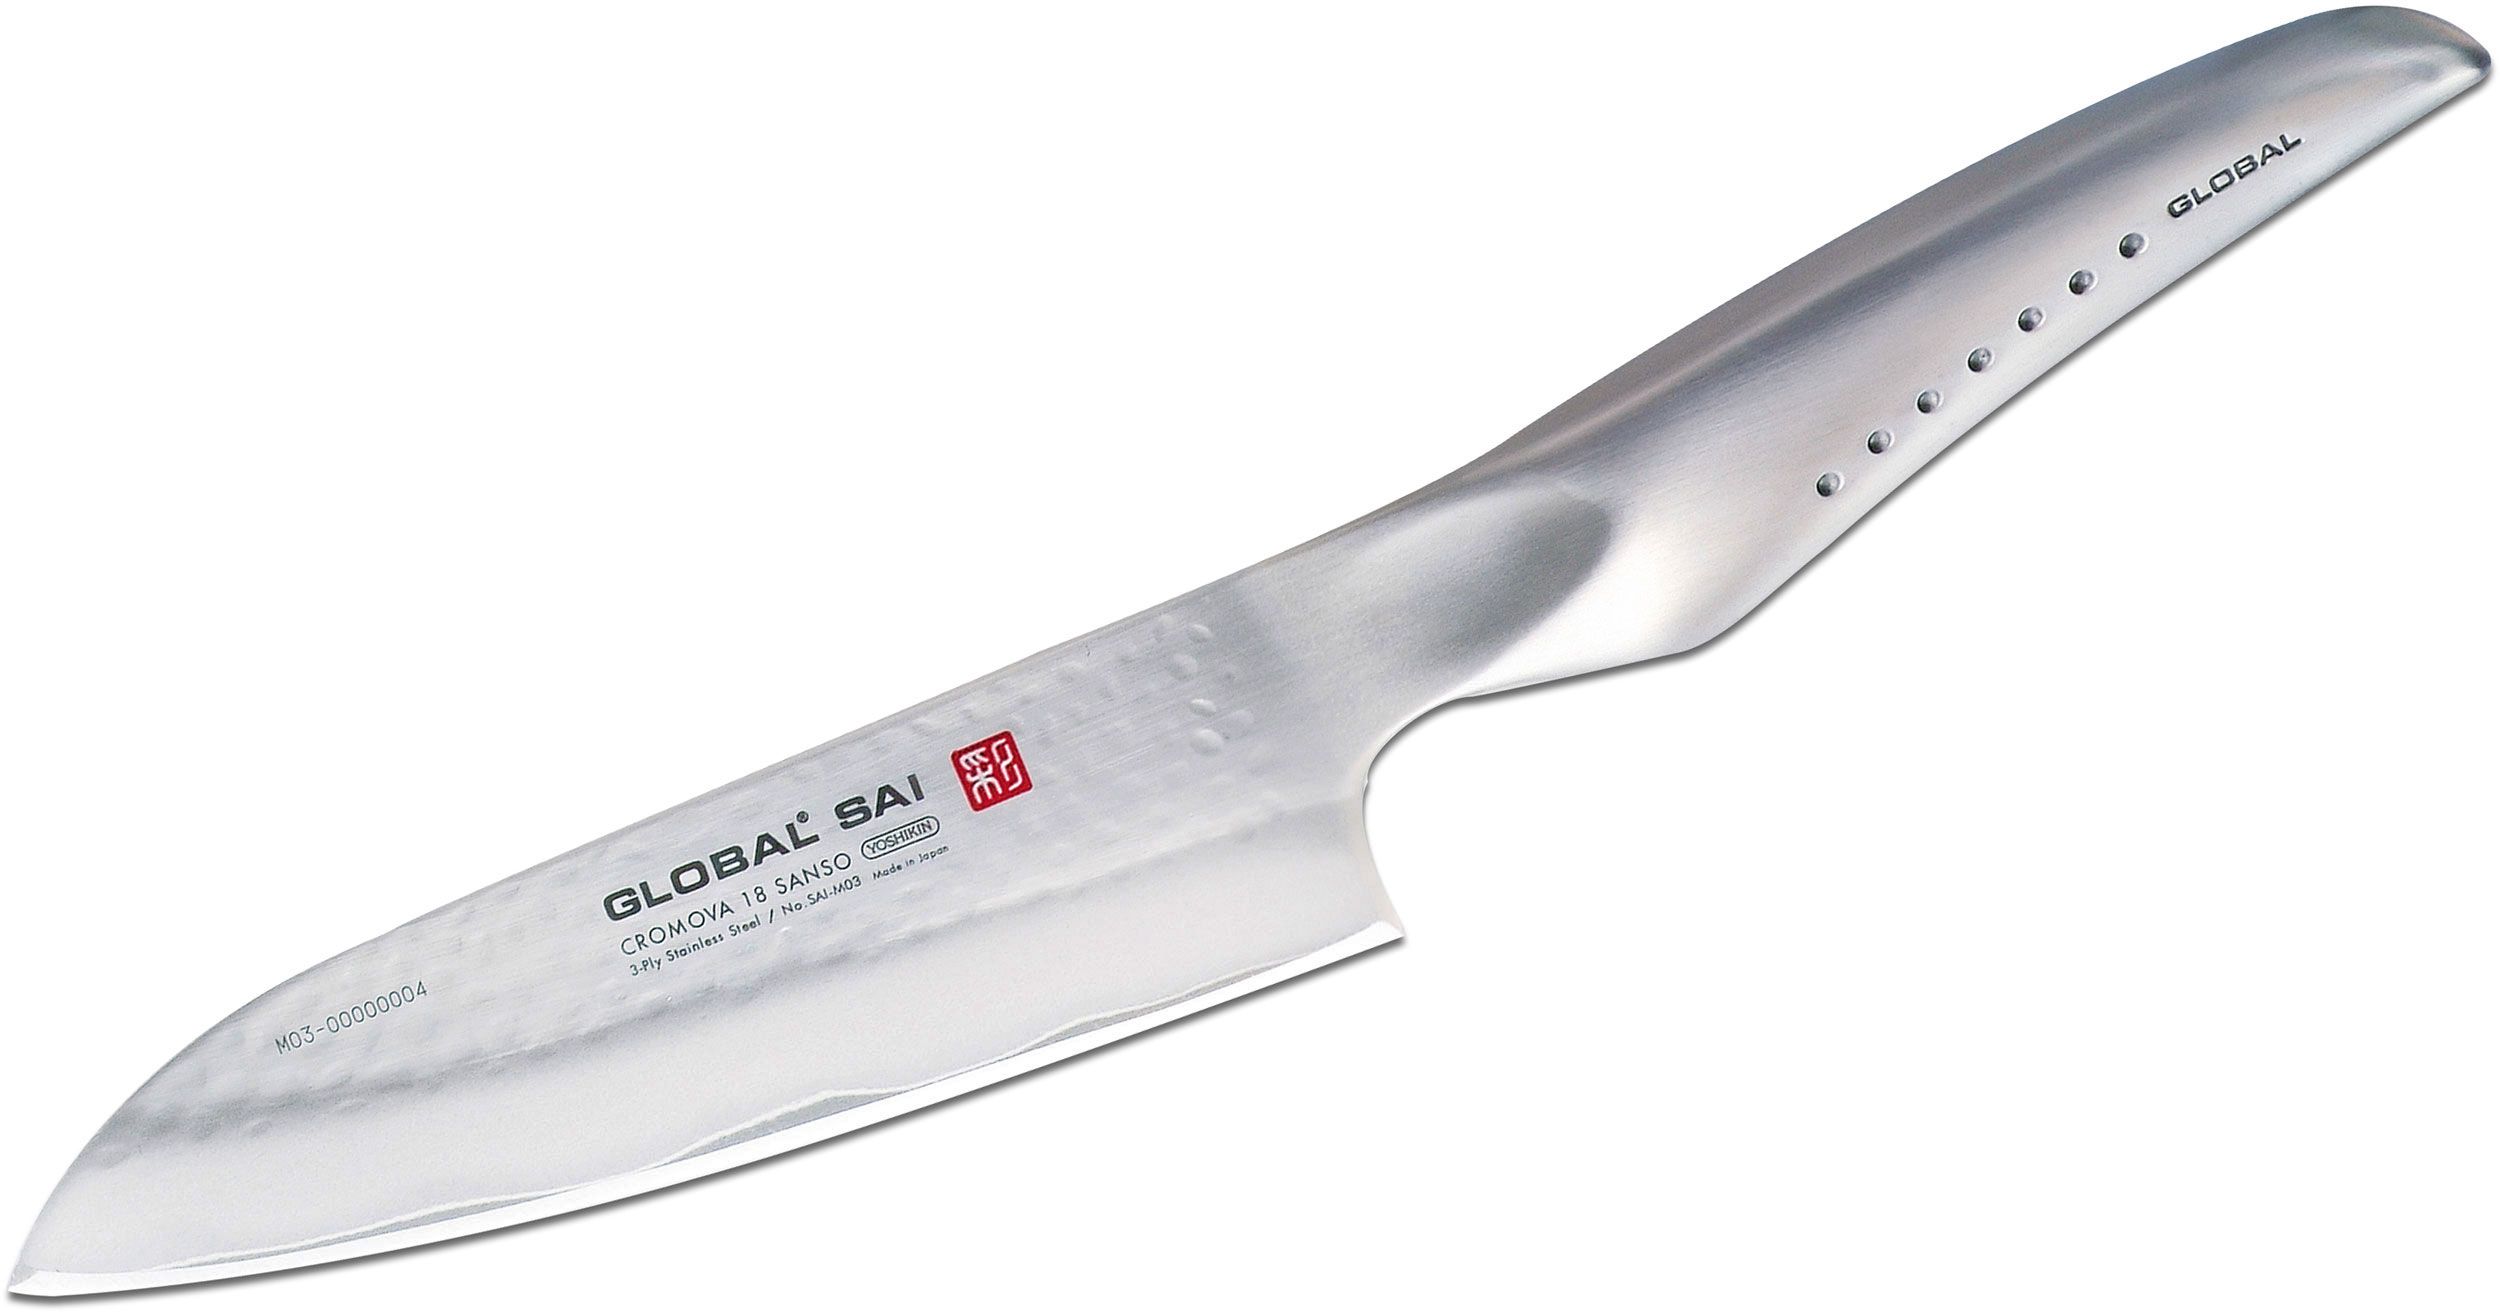 Global SAI-M03 Sai Santoku Knife 5" Hammered KnifeCenter